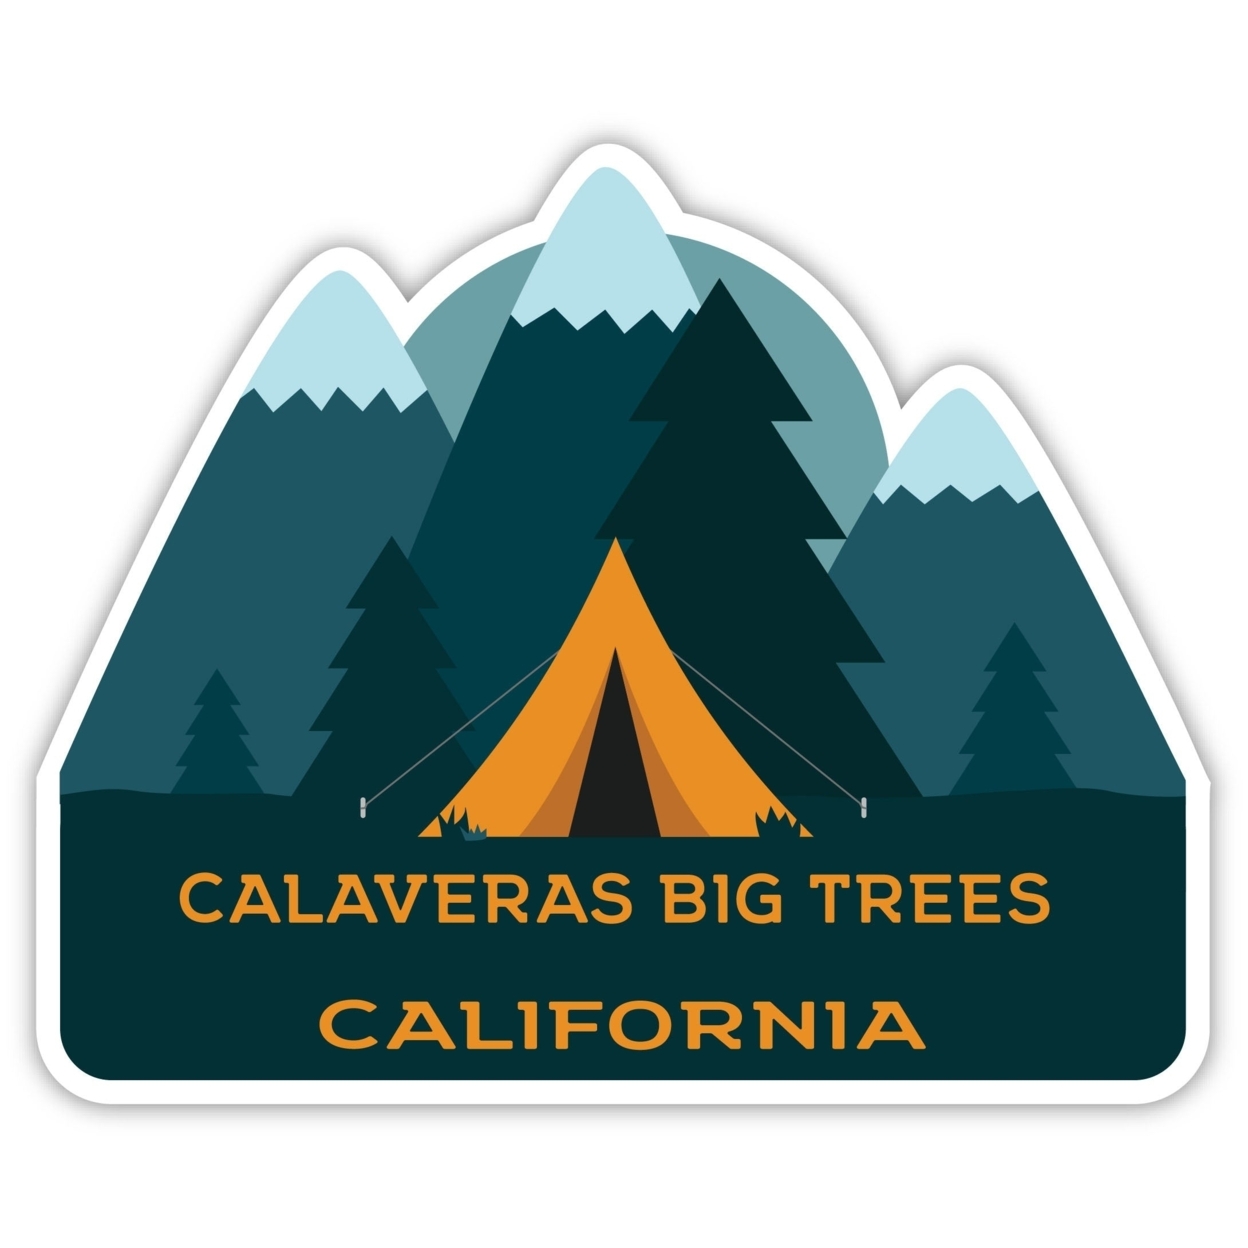 Calaveras Big Trees California Souvenir Decorative Stickers (Choose Theme And Size) - Single Unit, 4-Inch, Adventures Awaits